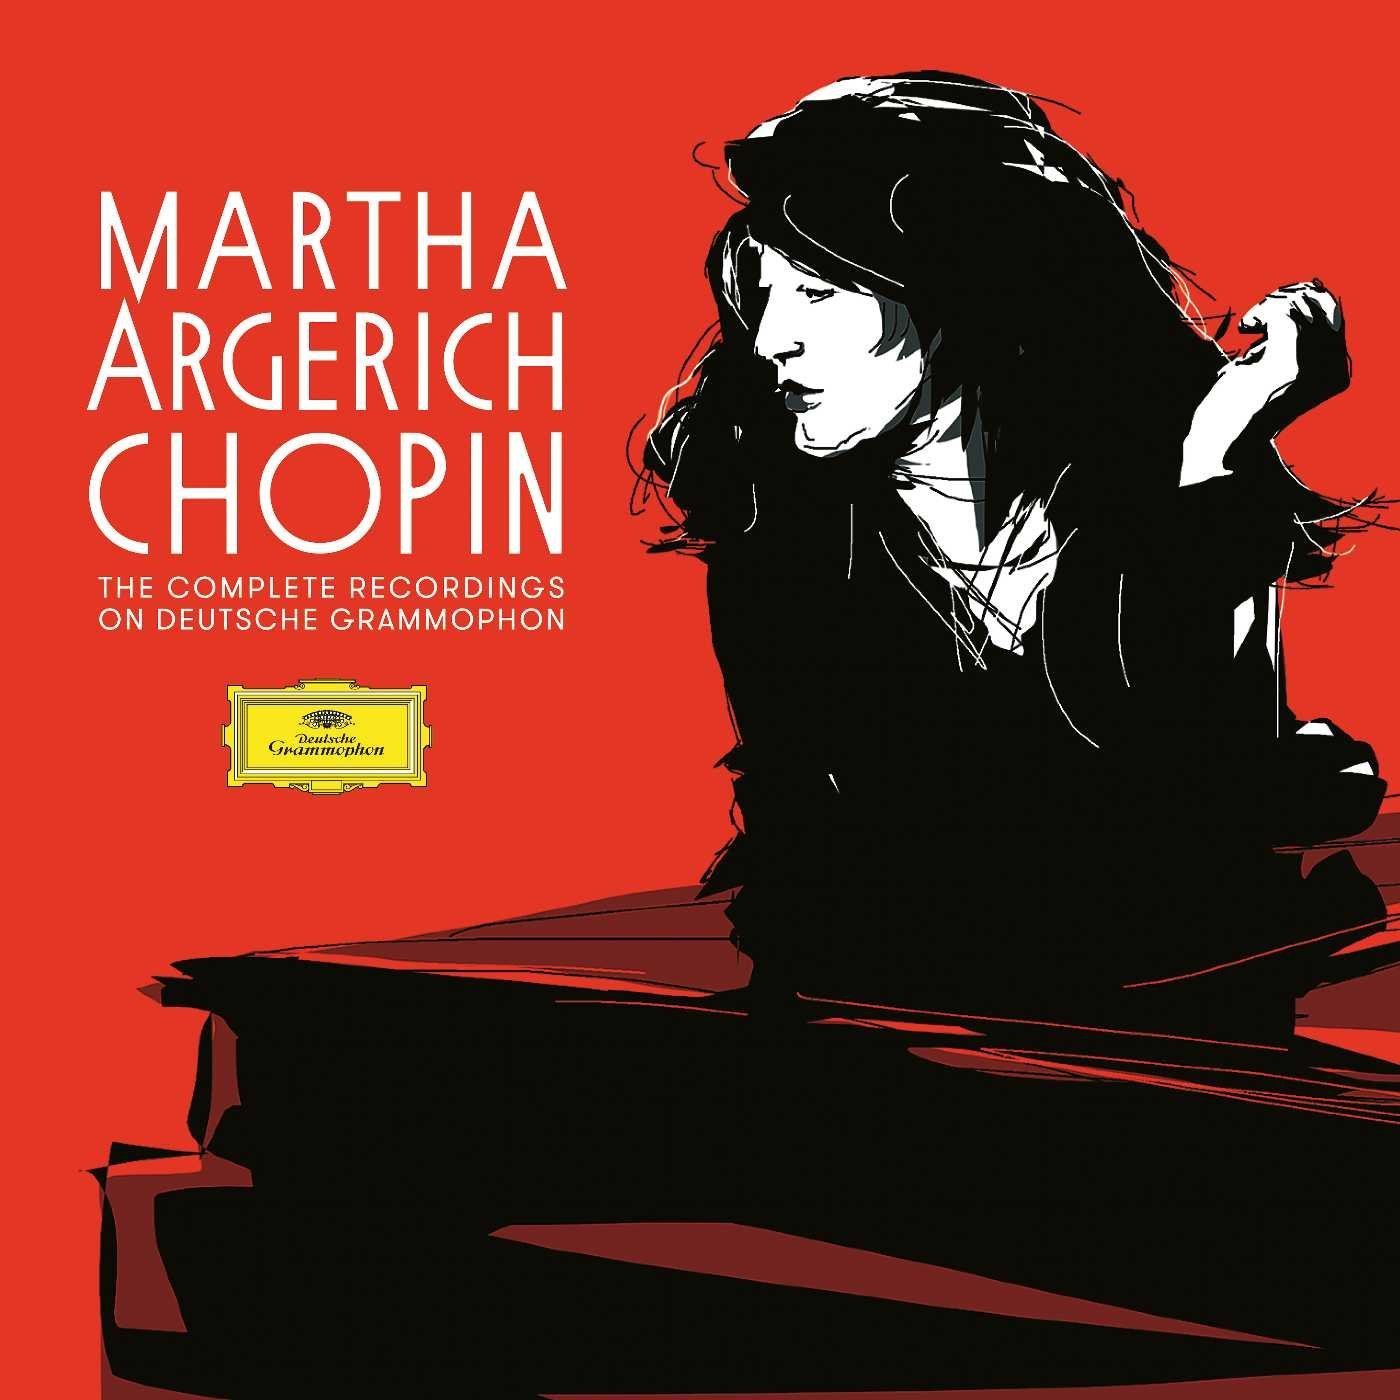 Complete Chopin Recordings On Deutsche Grammophon | Martha Argerich